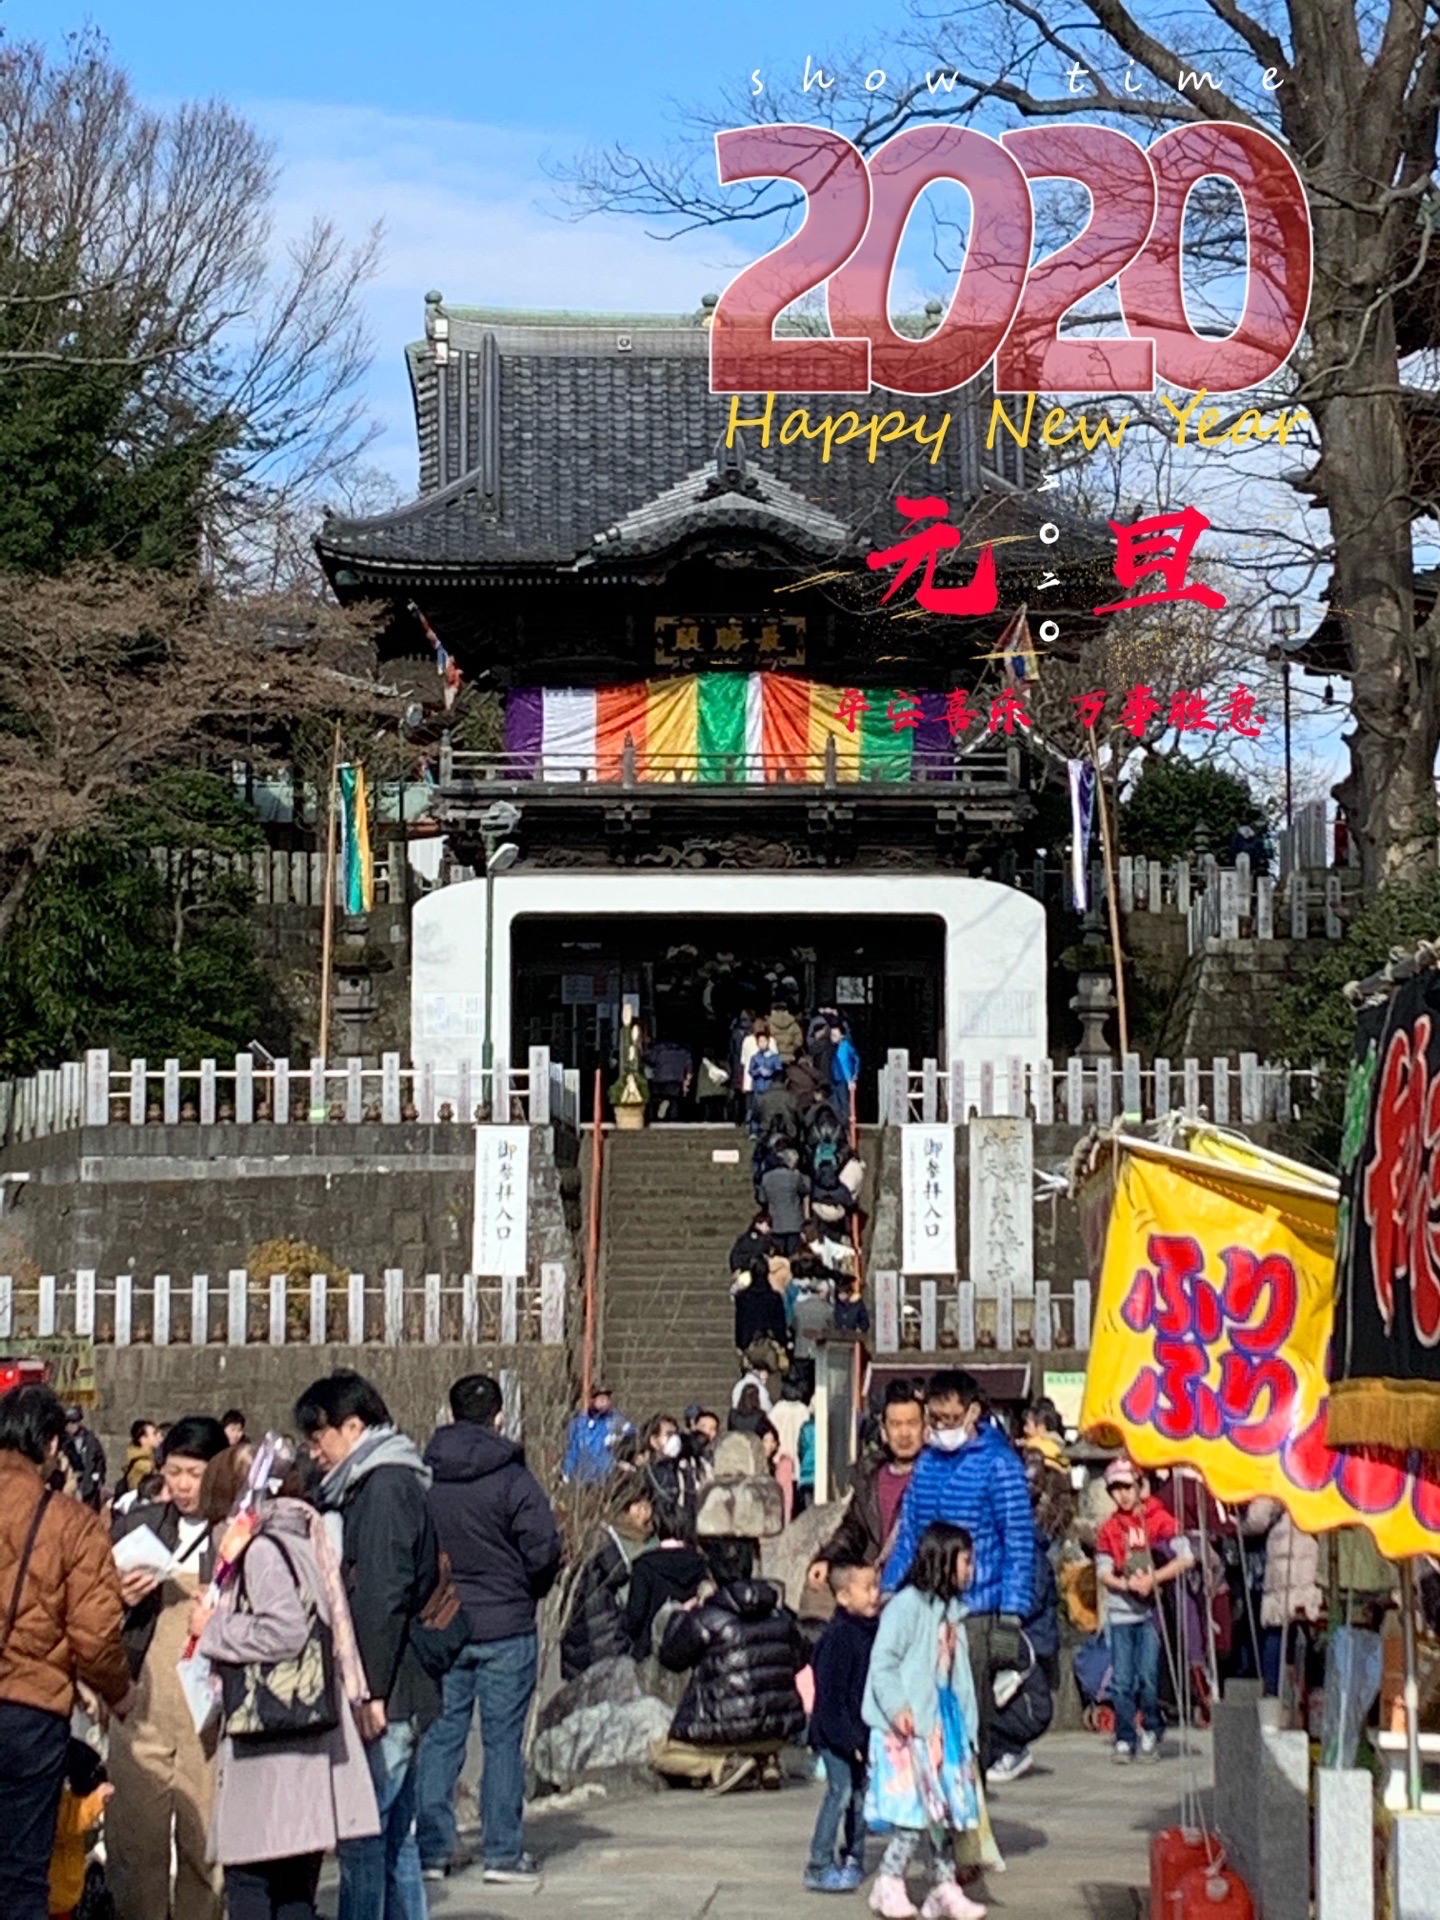 在日本过新年----日本人过年都会做一件重要的事情，那就是“初詣（はつもうで）”，信奉神明的日本人对